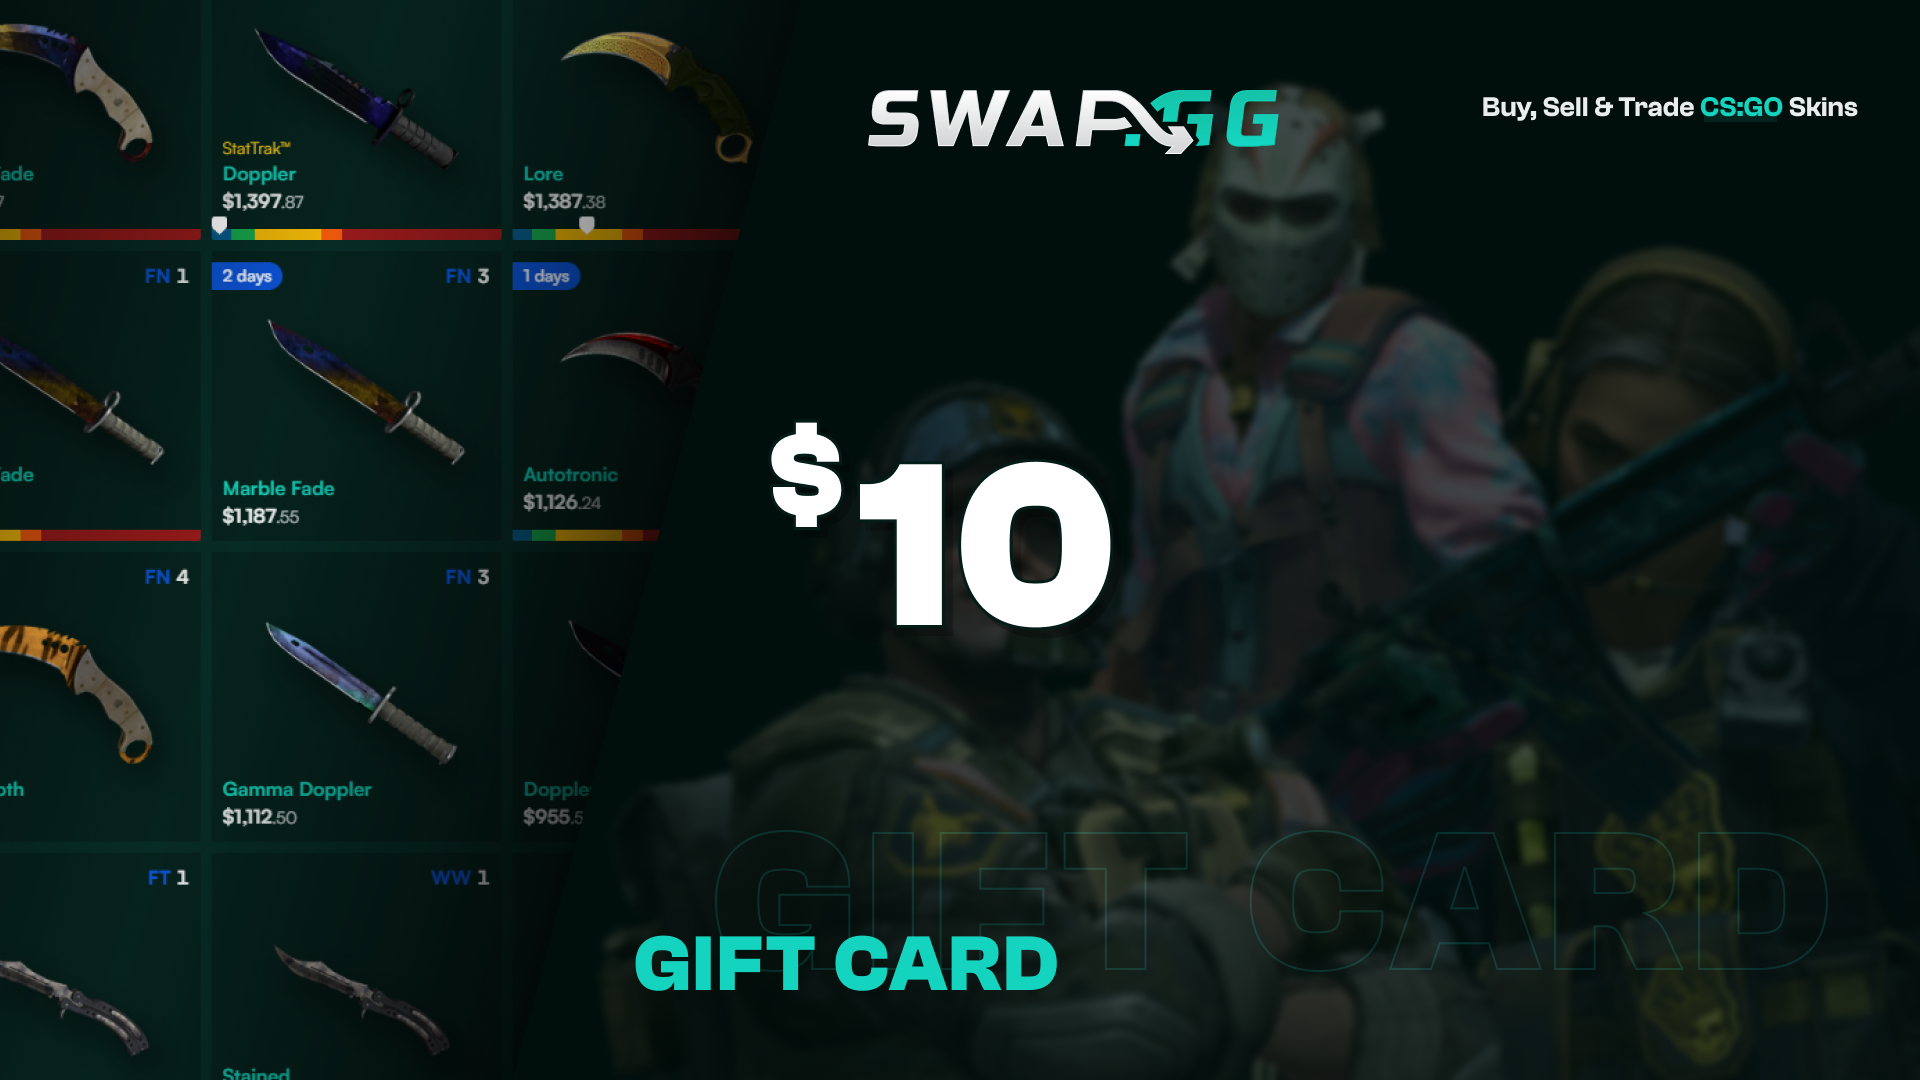 Swap.gg $10 Gift Card